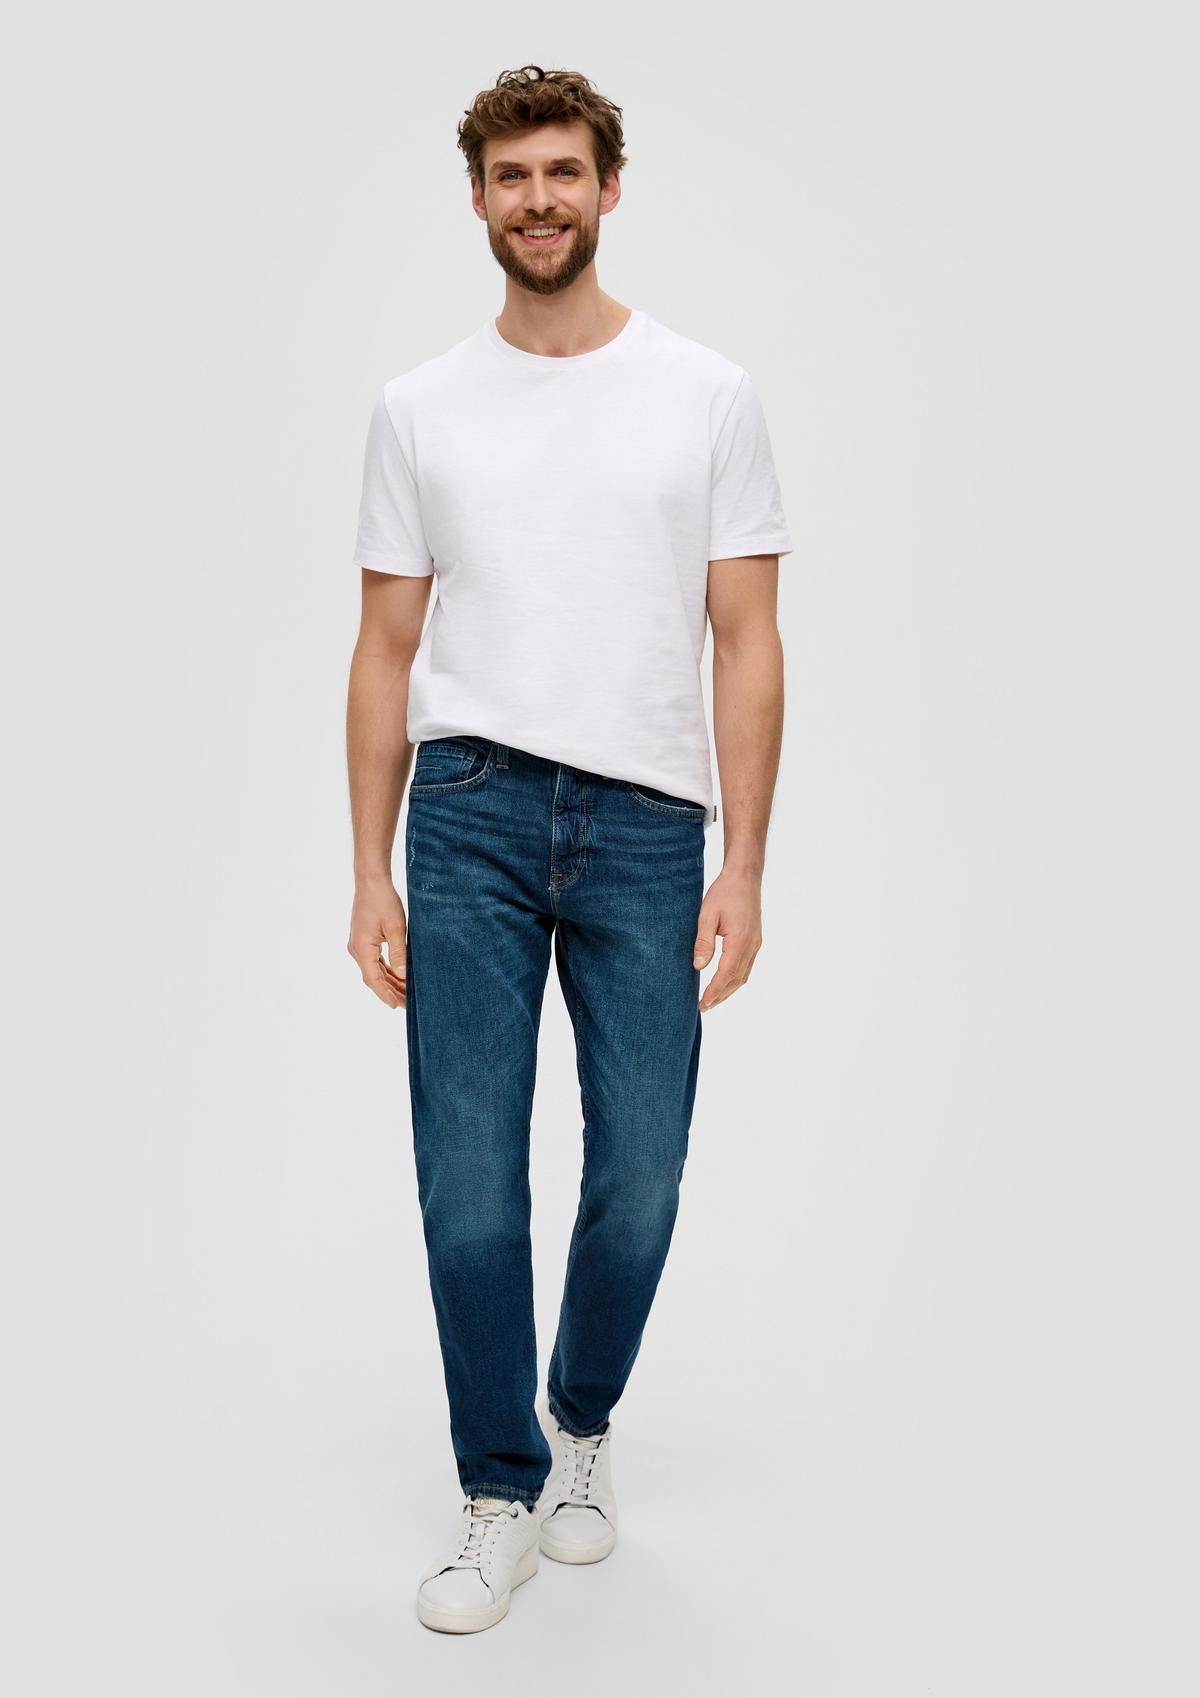 s.Oliver Jeans / regular fit / high rise / tapered leg